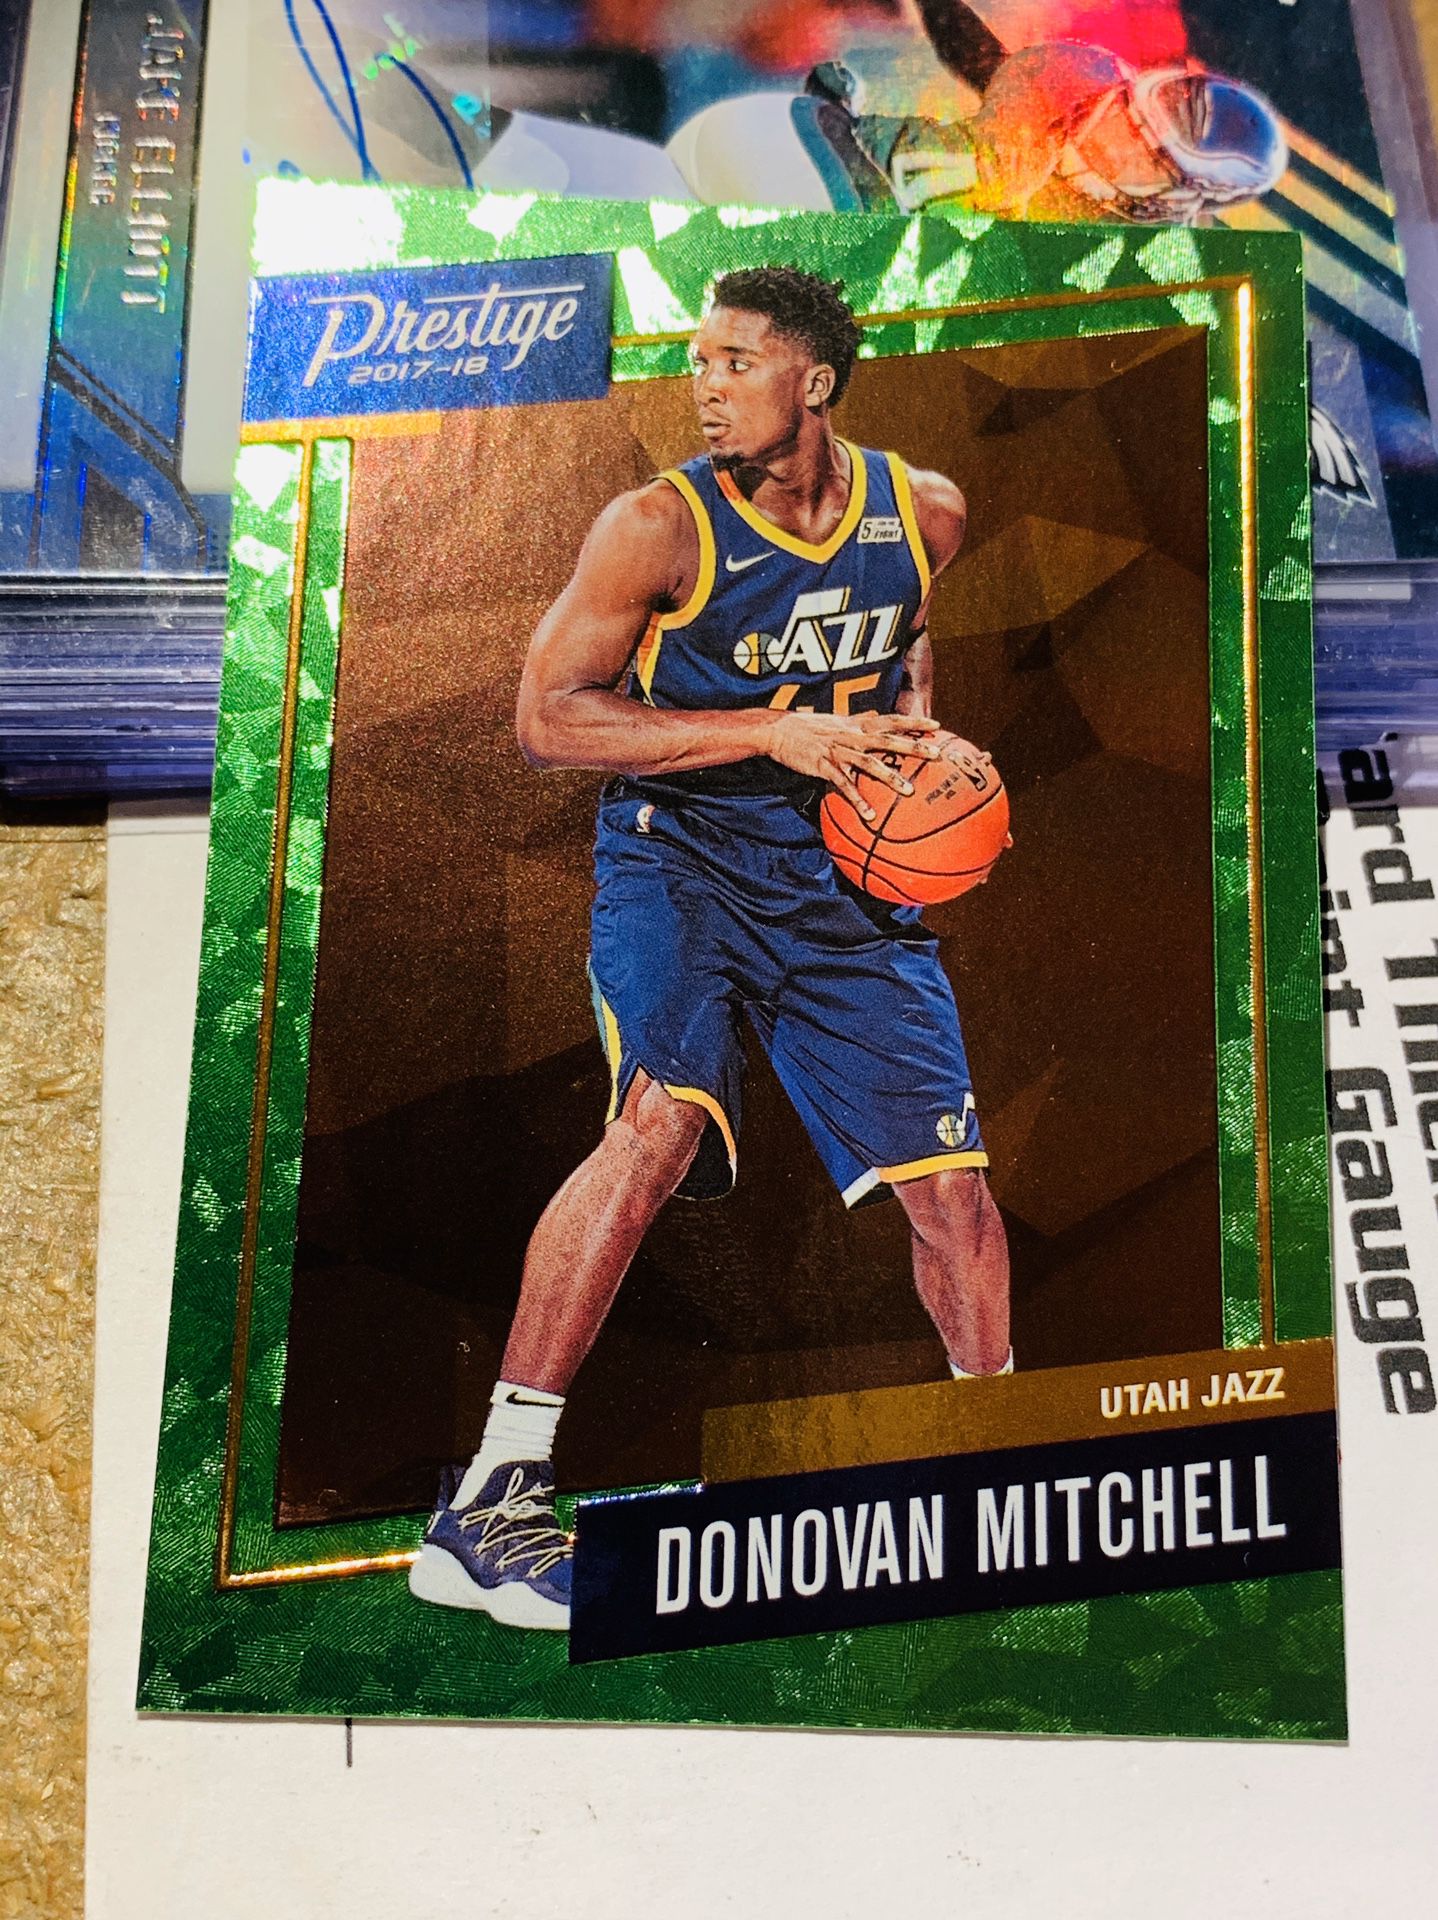 2017-2018 Panini Prestige Basketball Donovan Mitchell Green Cracked Ice parallel Card No. 13